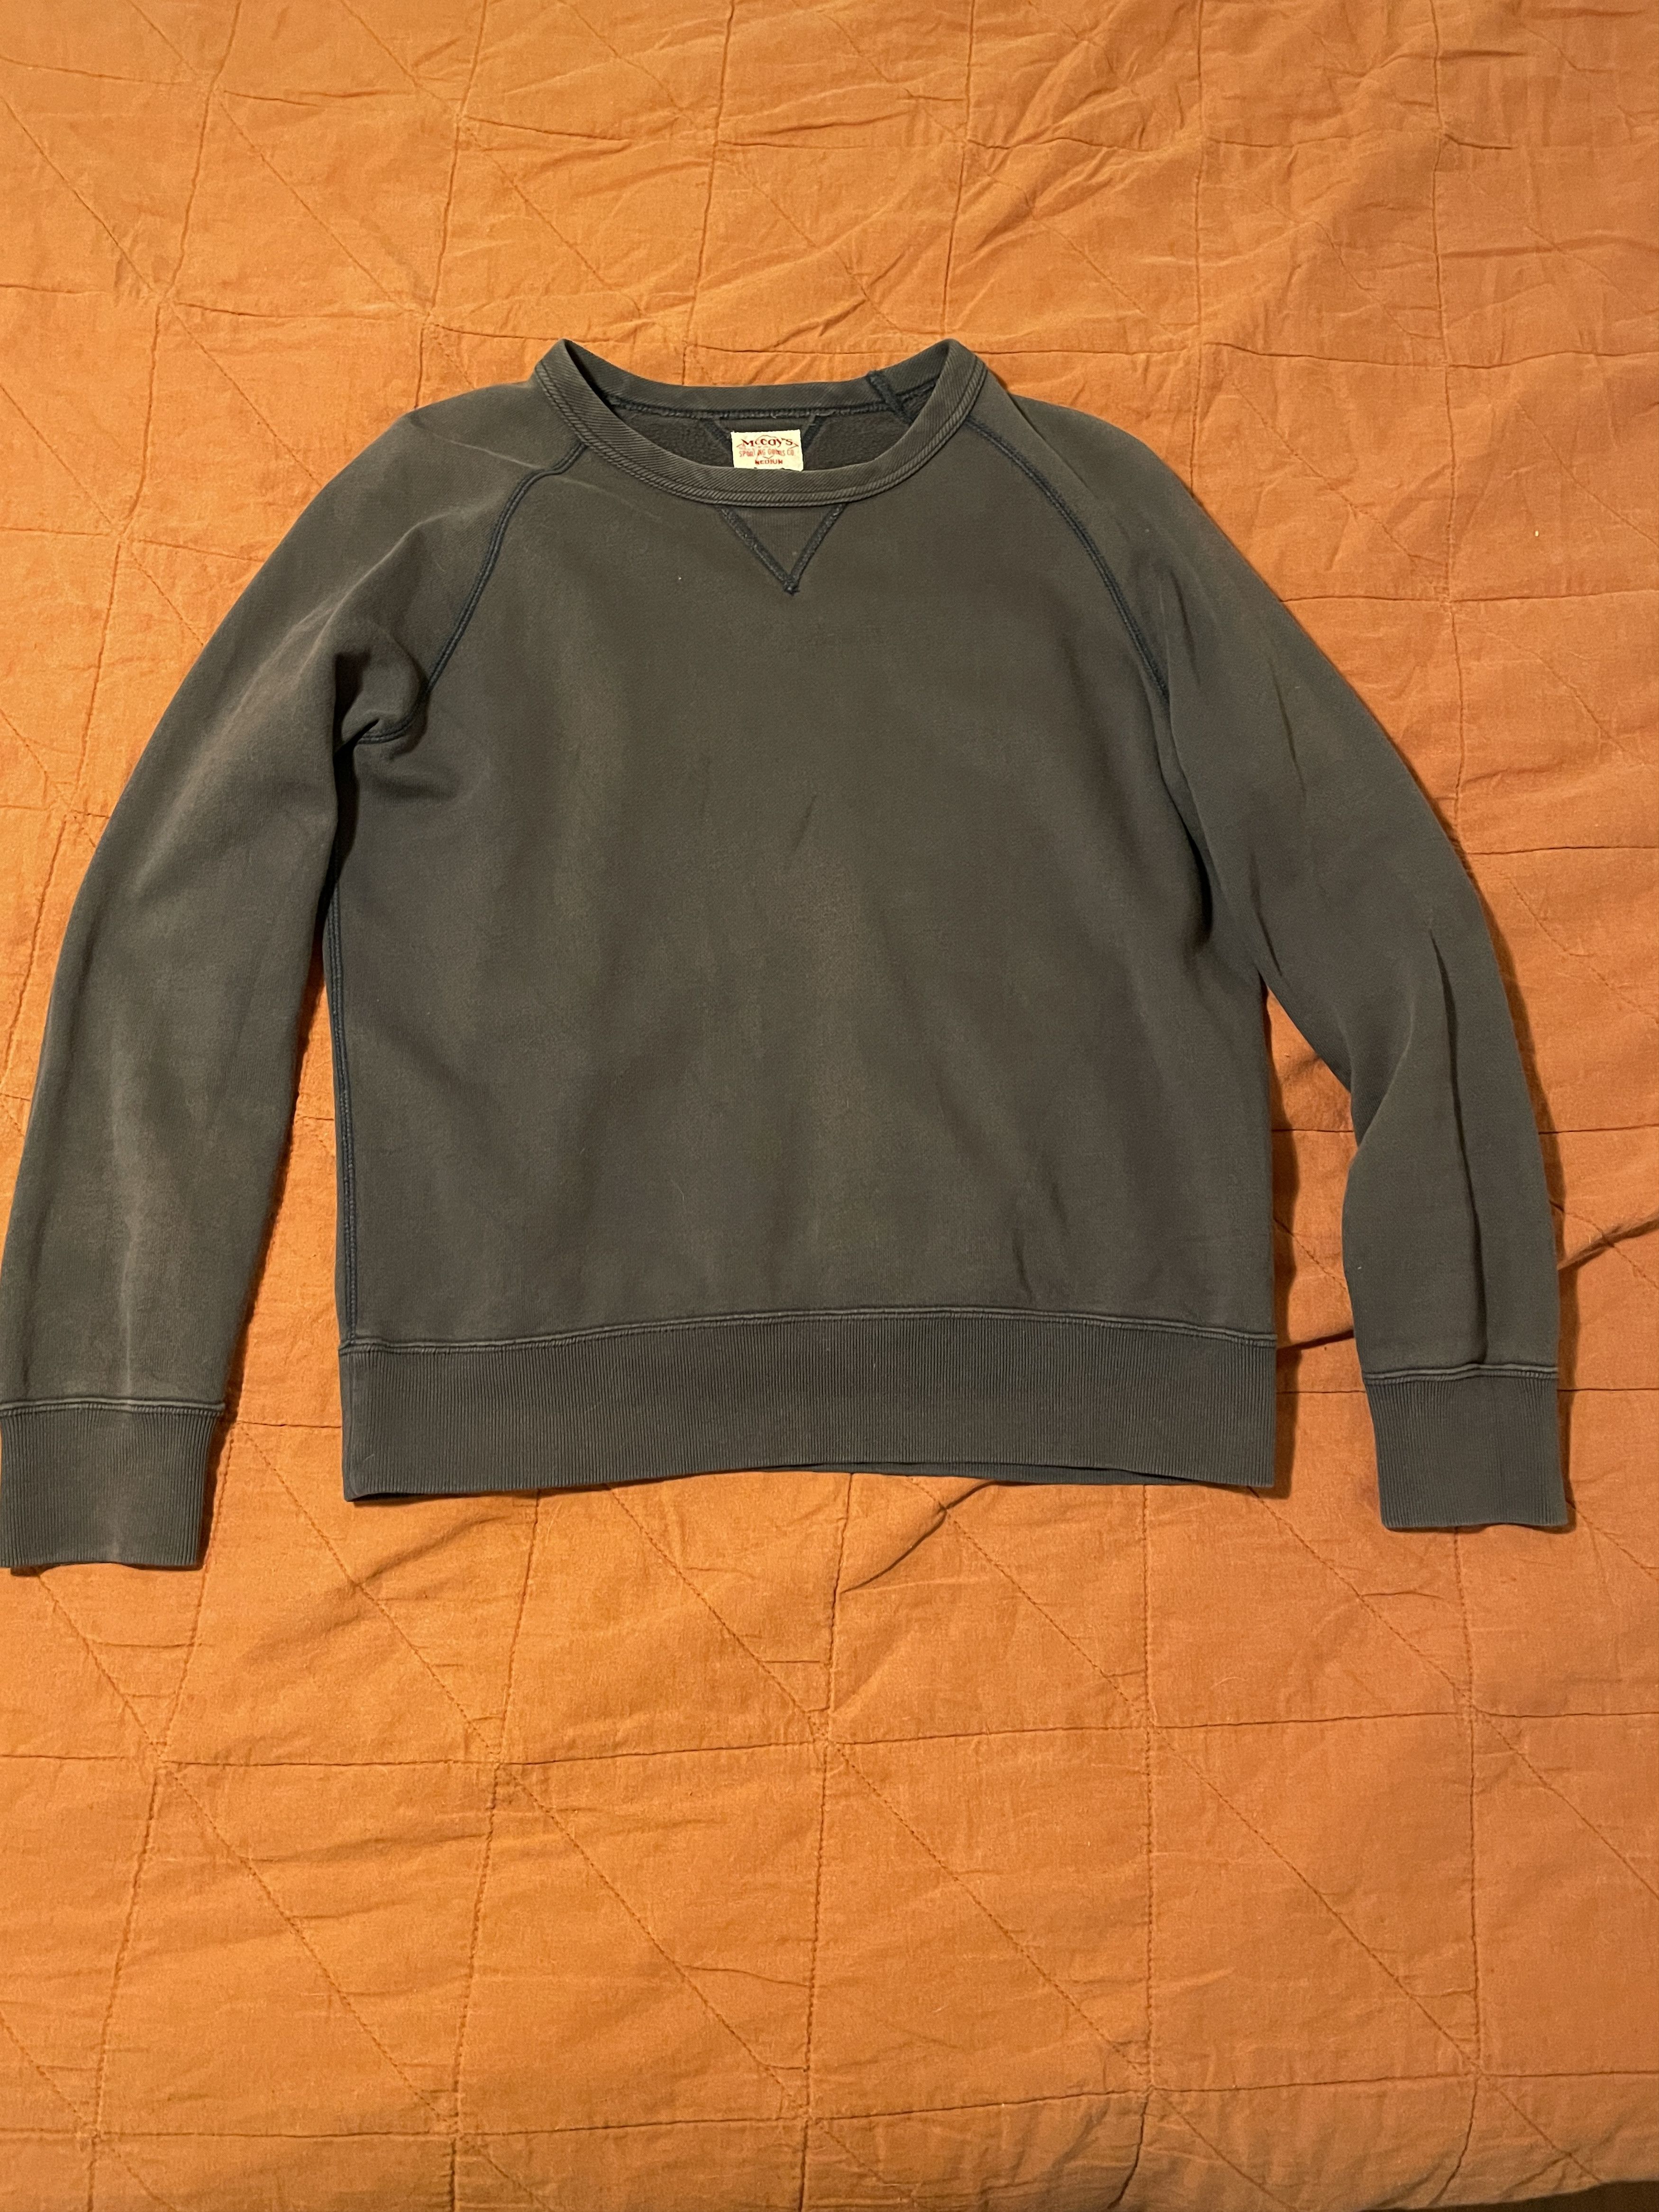 The Real McCoy's Joe McCoy Sweatshirt | Grailed